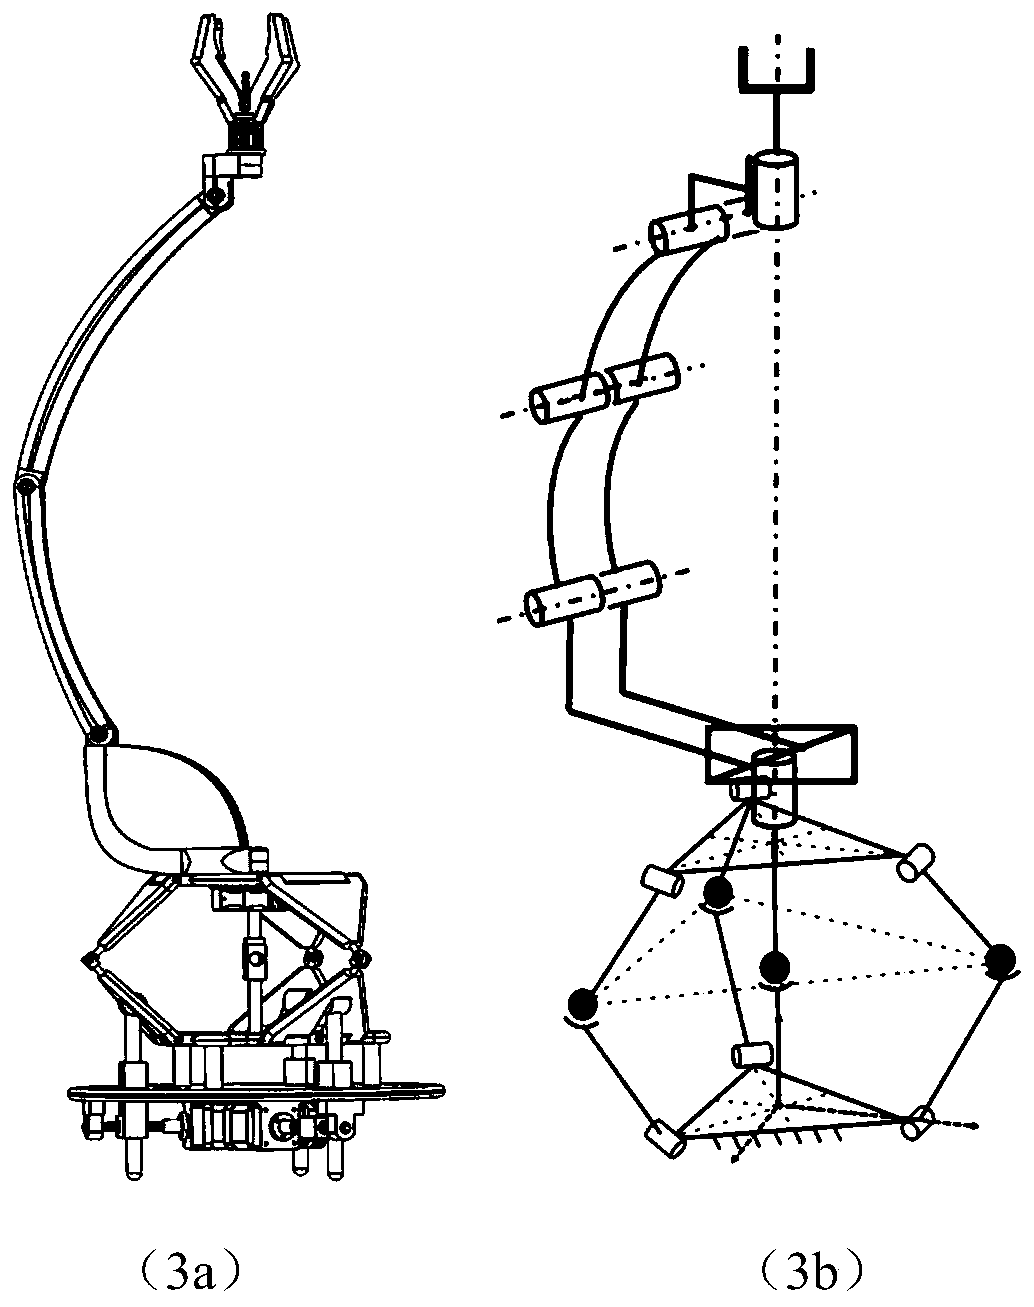 Multi-mode series-parallel mechanical arm based on movement bifurcation mechanism